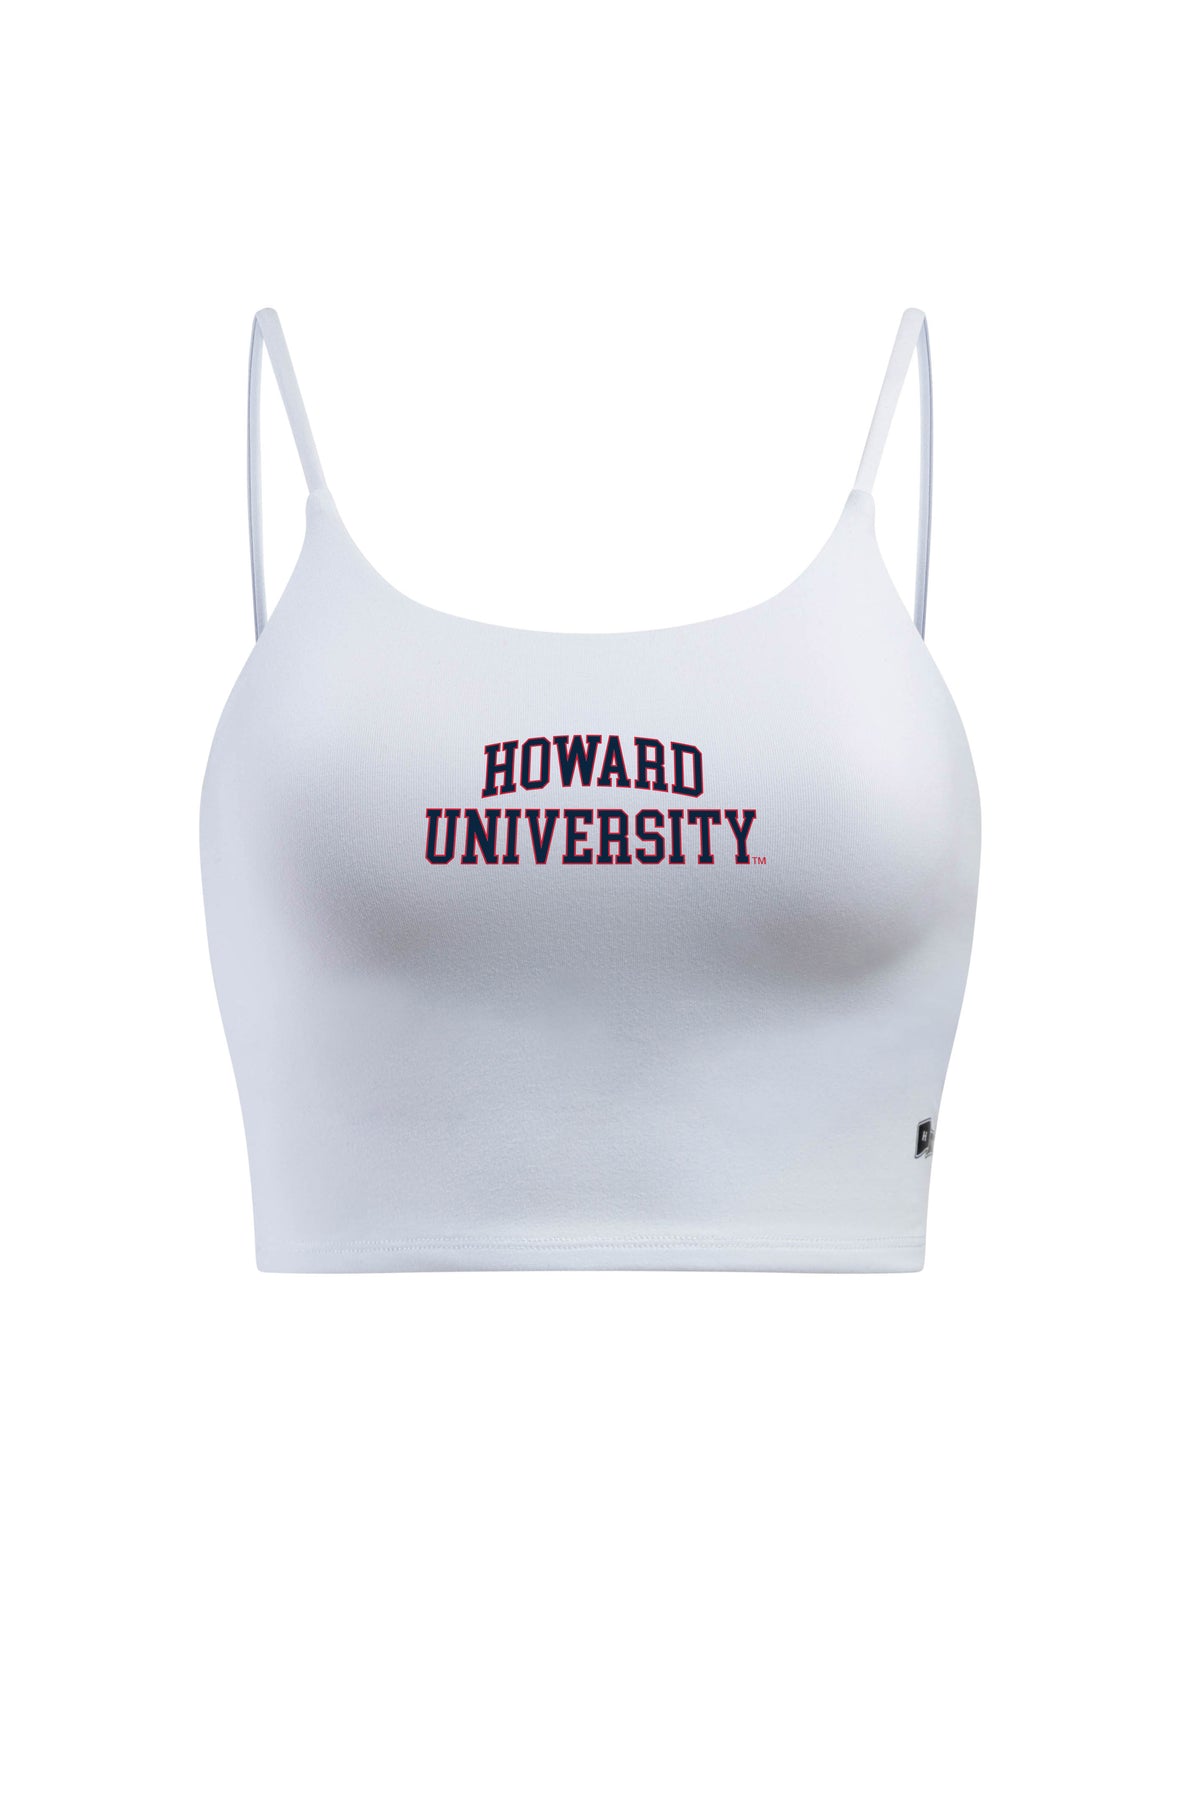 Howard University Bra Tank Top